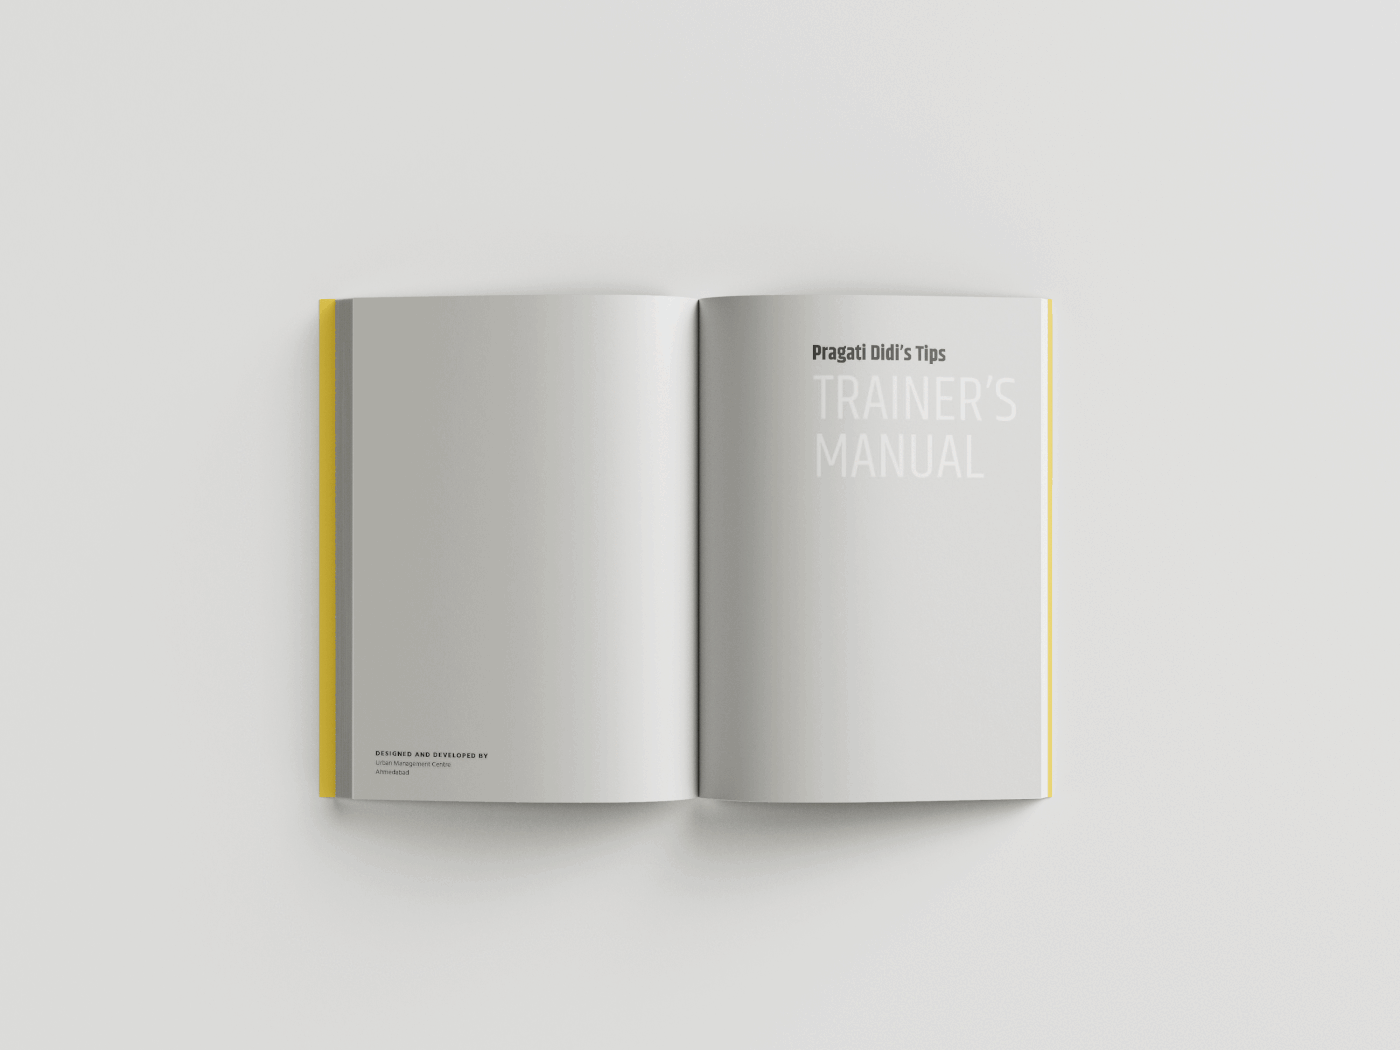 publication design book design editorial design  information architecture  User manual Design Financial Literacy